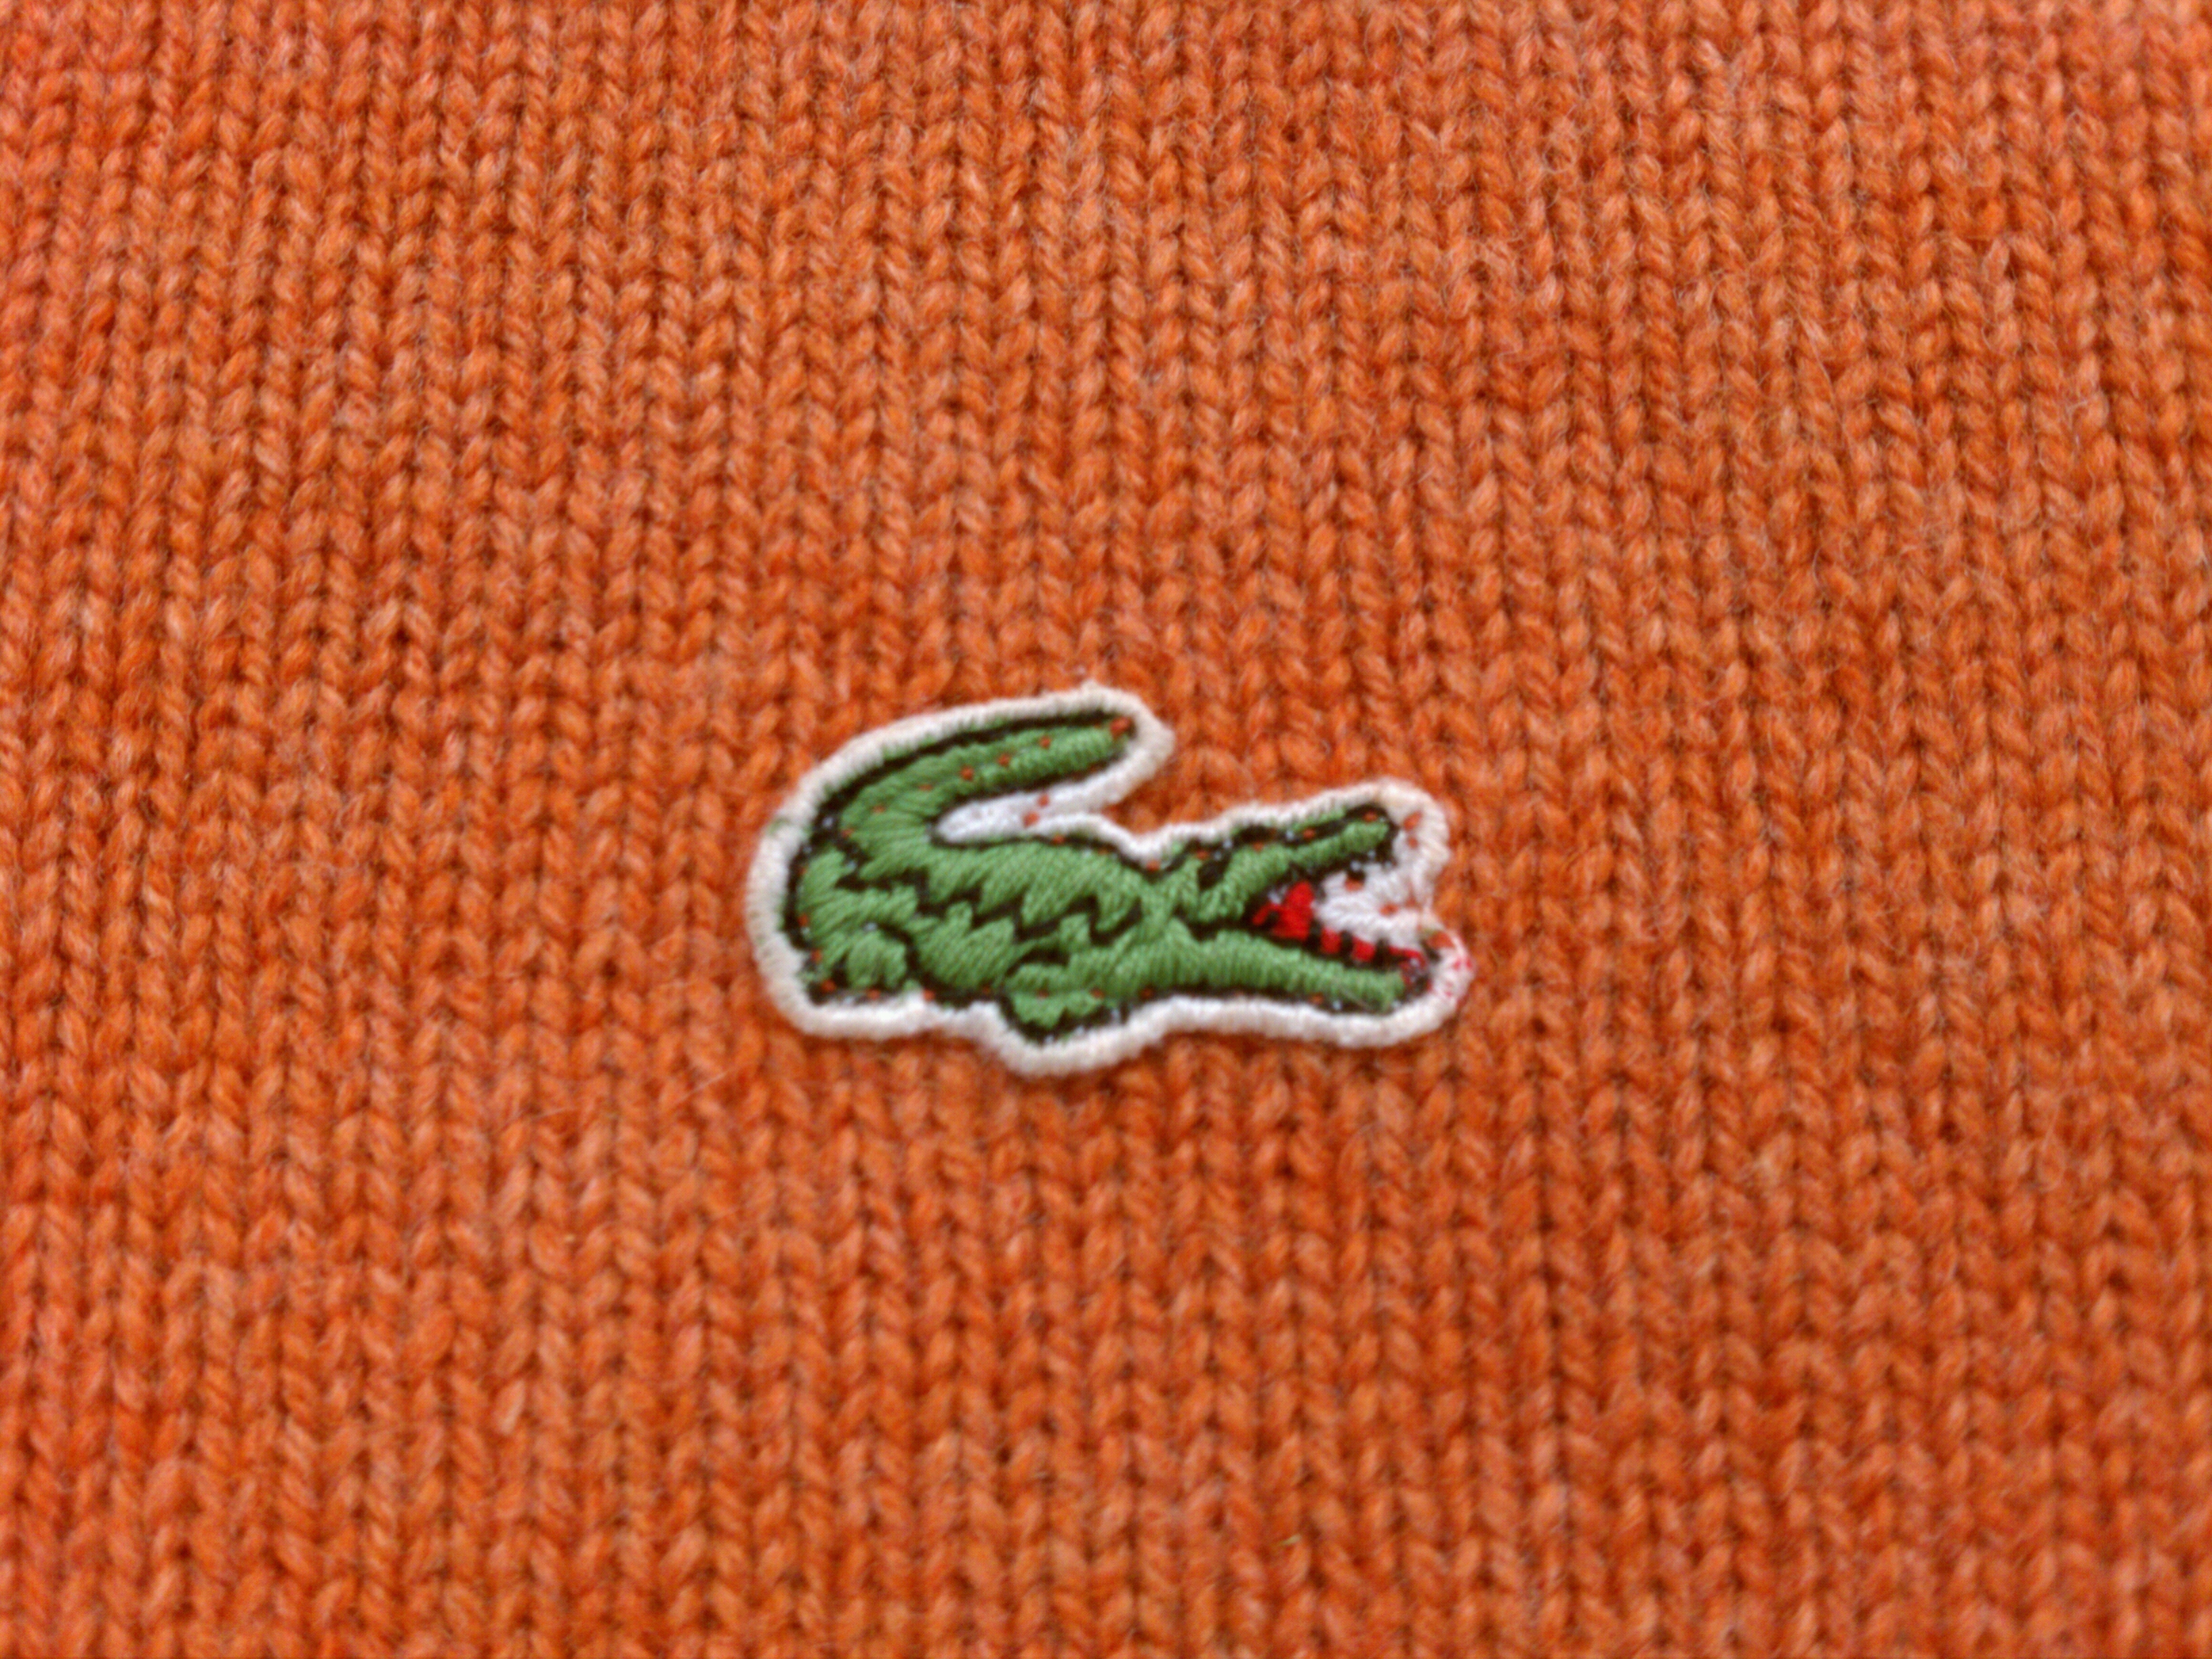 gator symbol on clothes